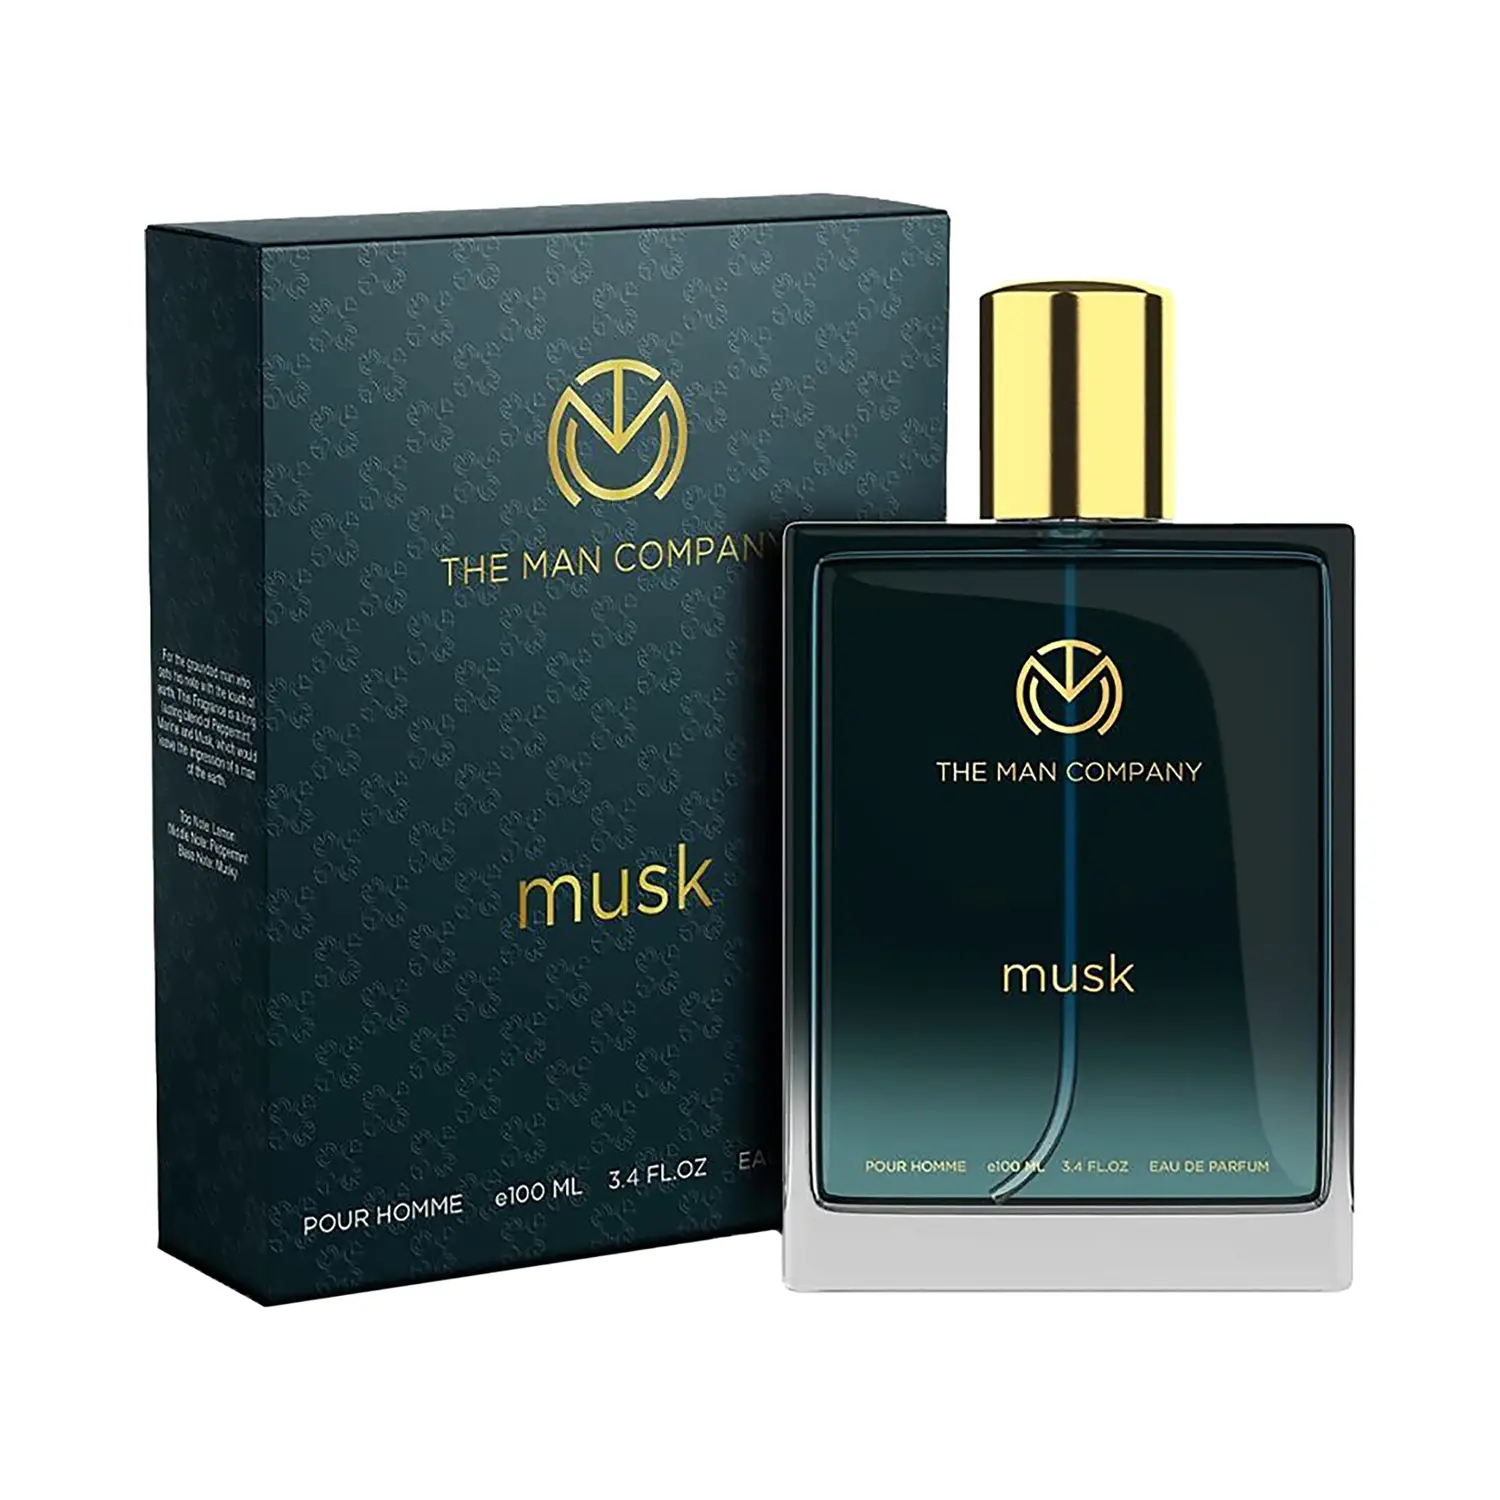 The Man Company | The Man Company Musk Eau De Parfum (100ml)